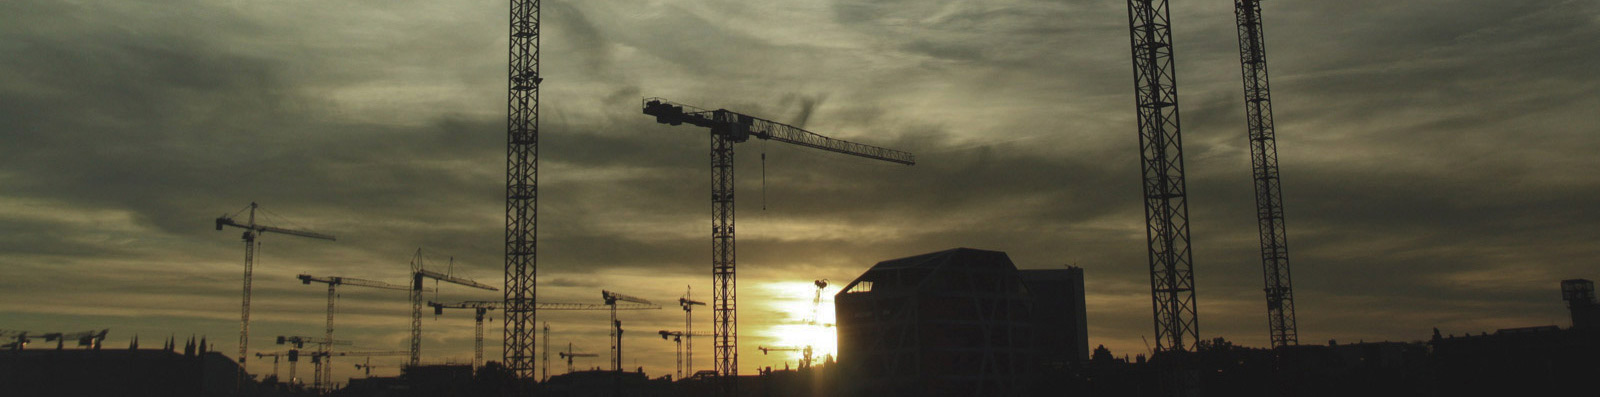 building site, cranes photo